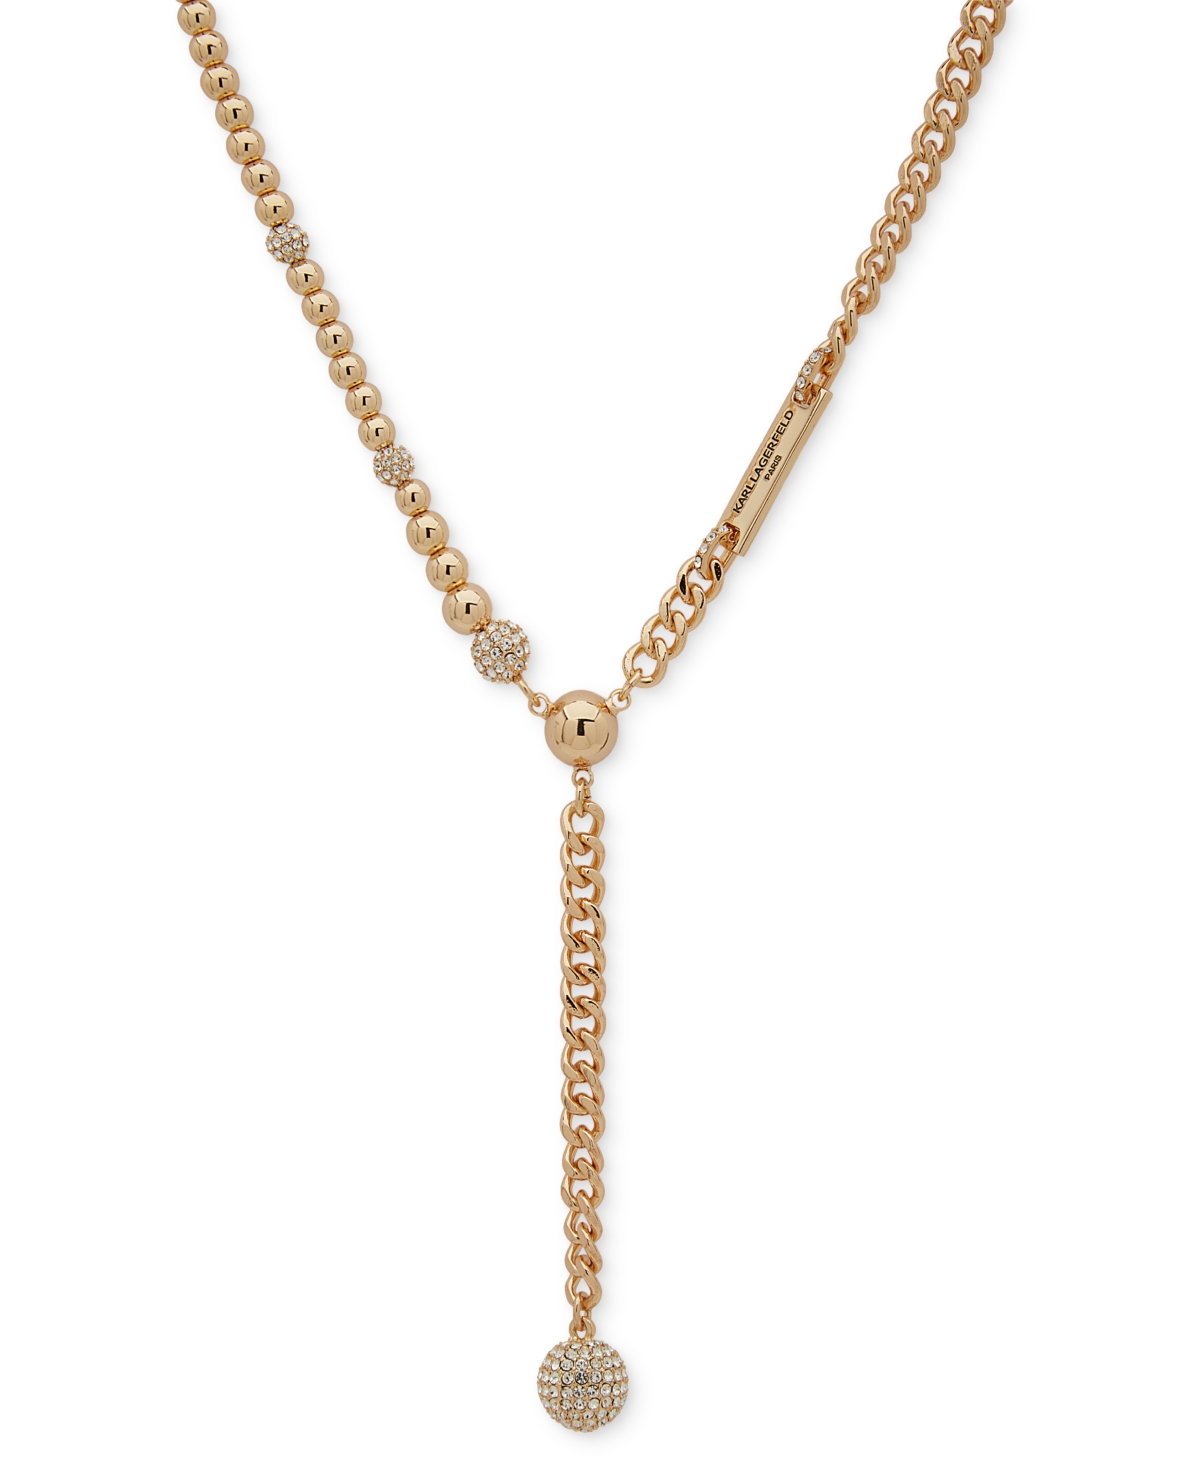 Women's Gold-Tone Lariat Necklace, 18"+ 3" extender - White